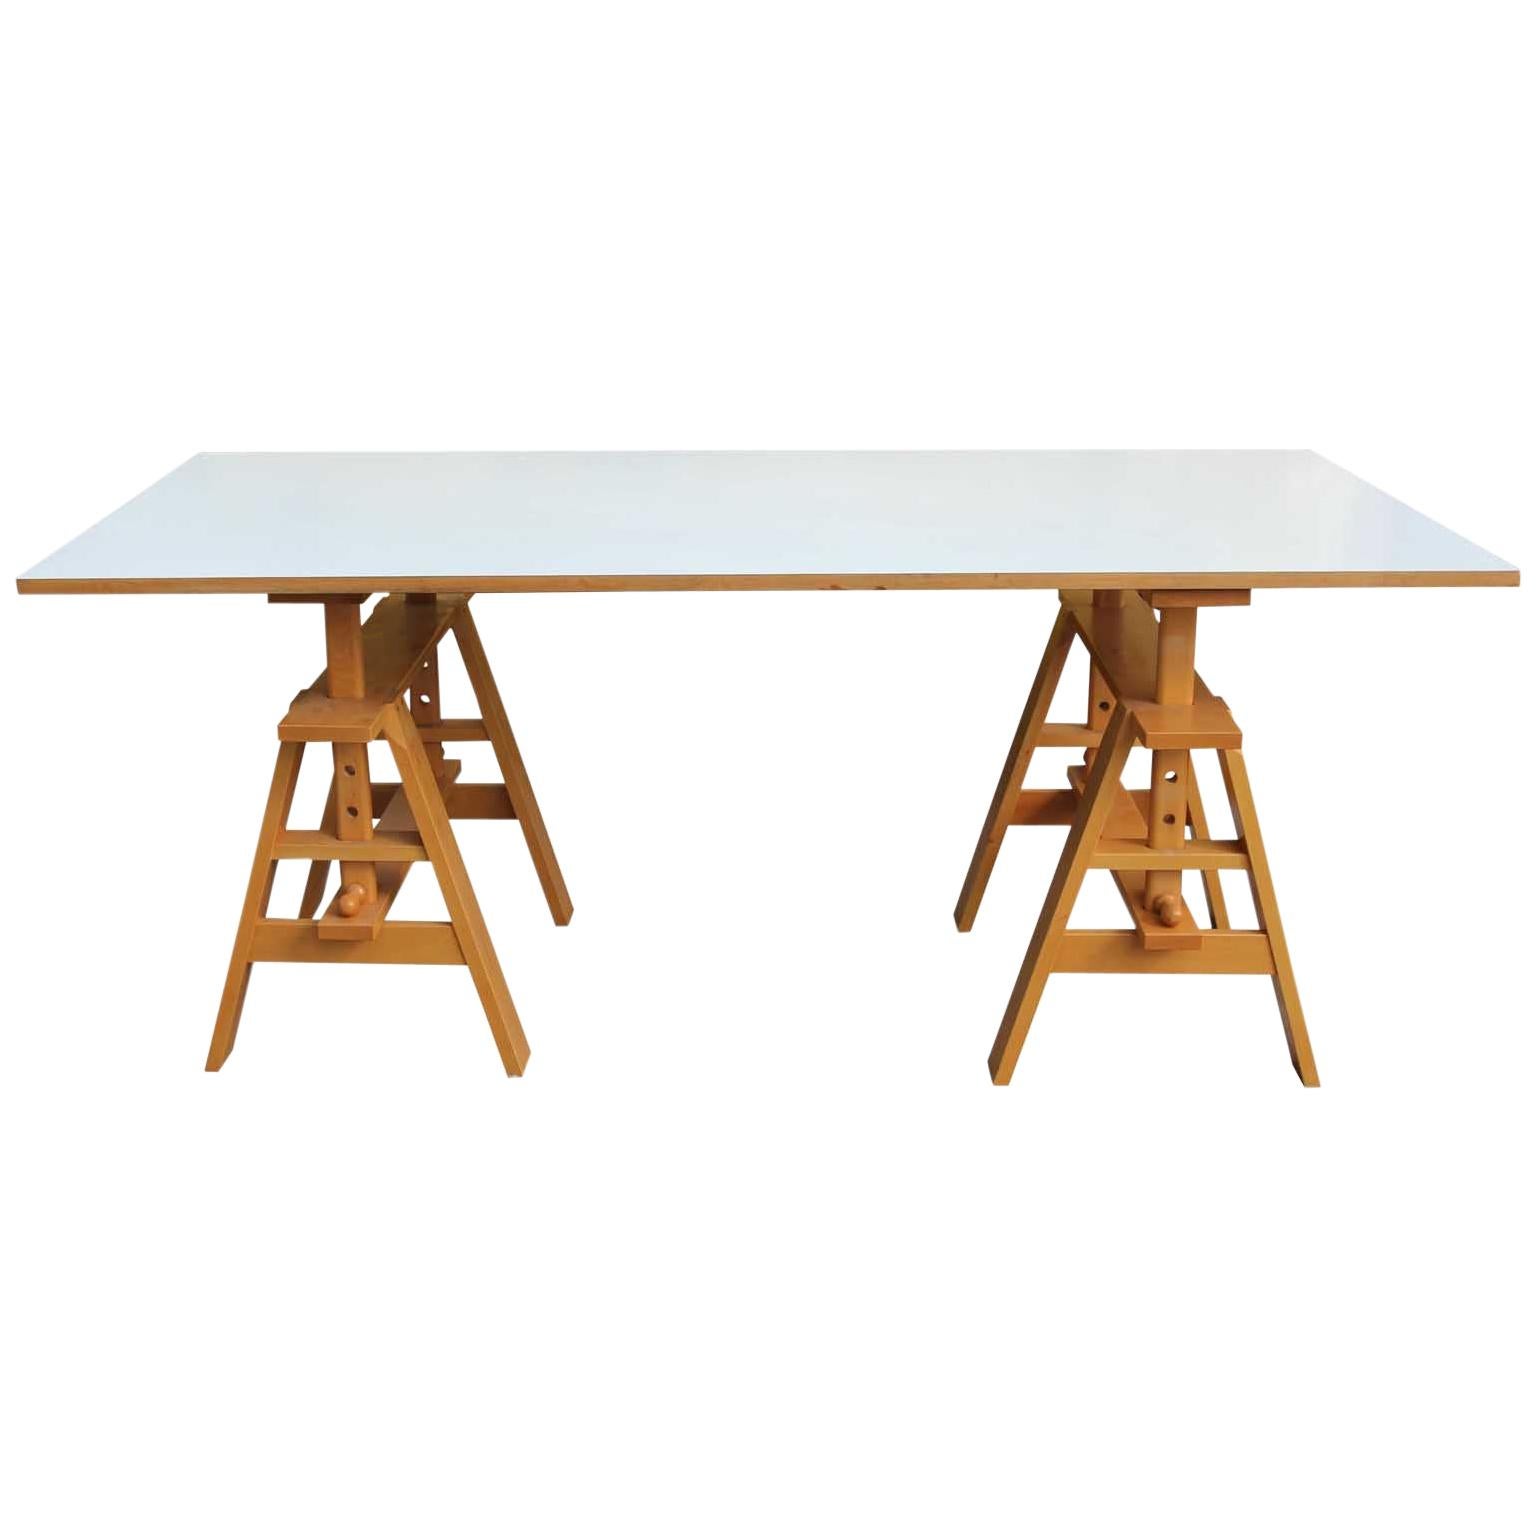 Modern Zanotta "Leonardo" Table by Achille & Pier Giacomo Castiglioni